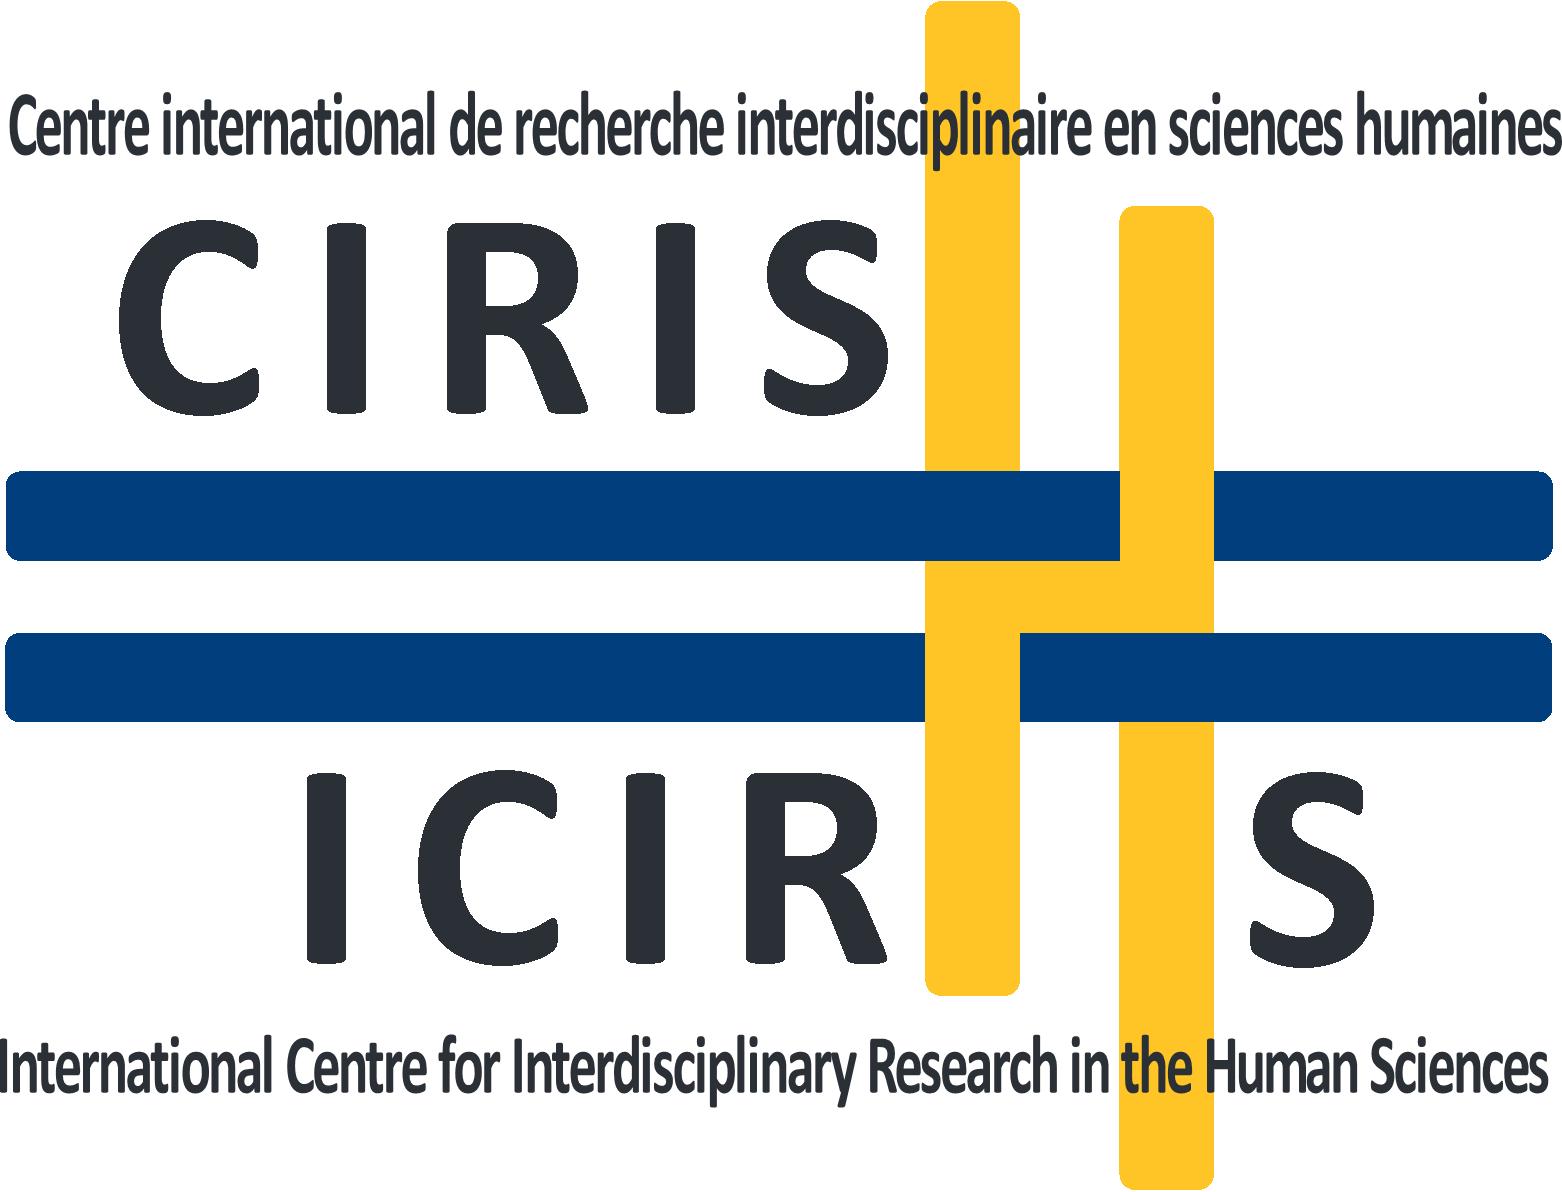 Centre international de recherche interdisciplinaire en sciences humaines